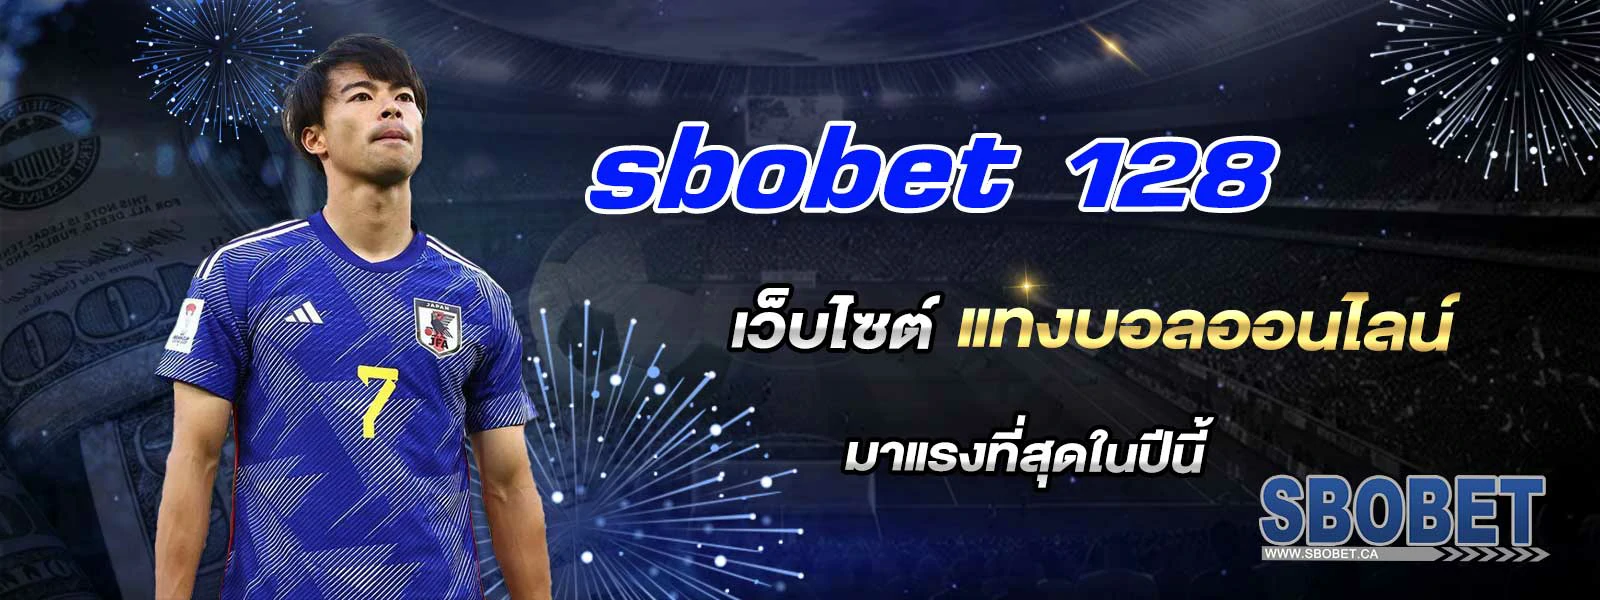 sbobet 128  เว็บไซต์ แทงบอลออนไลน์